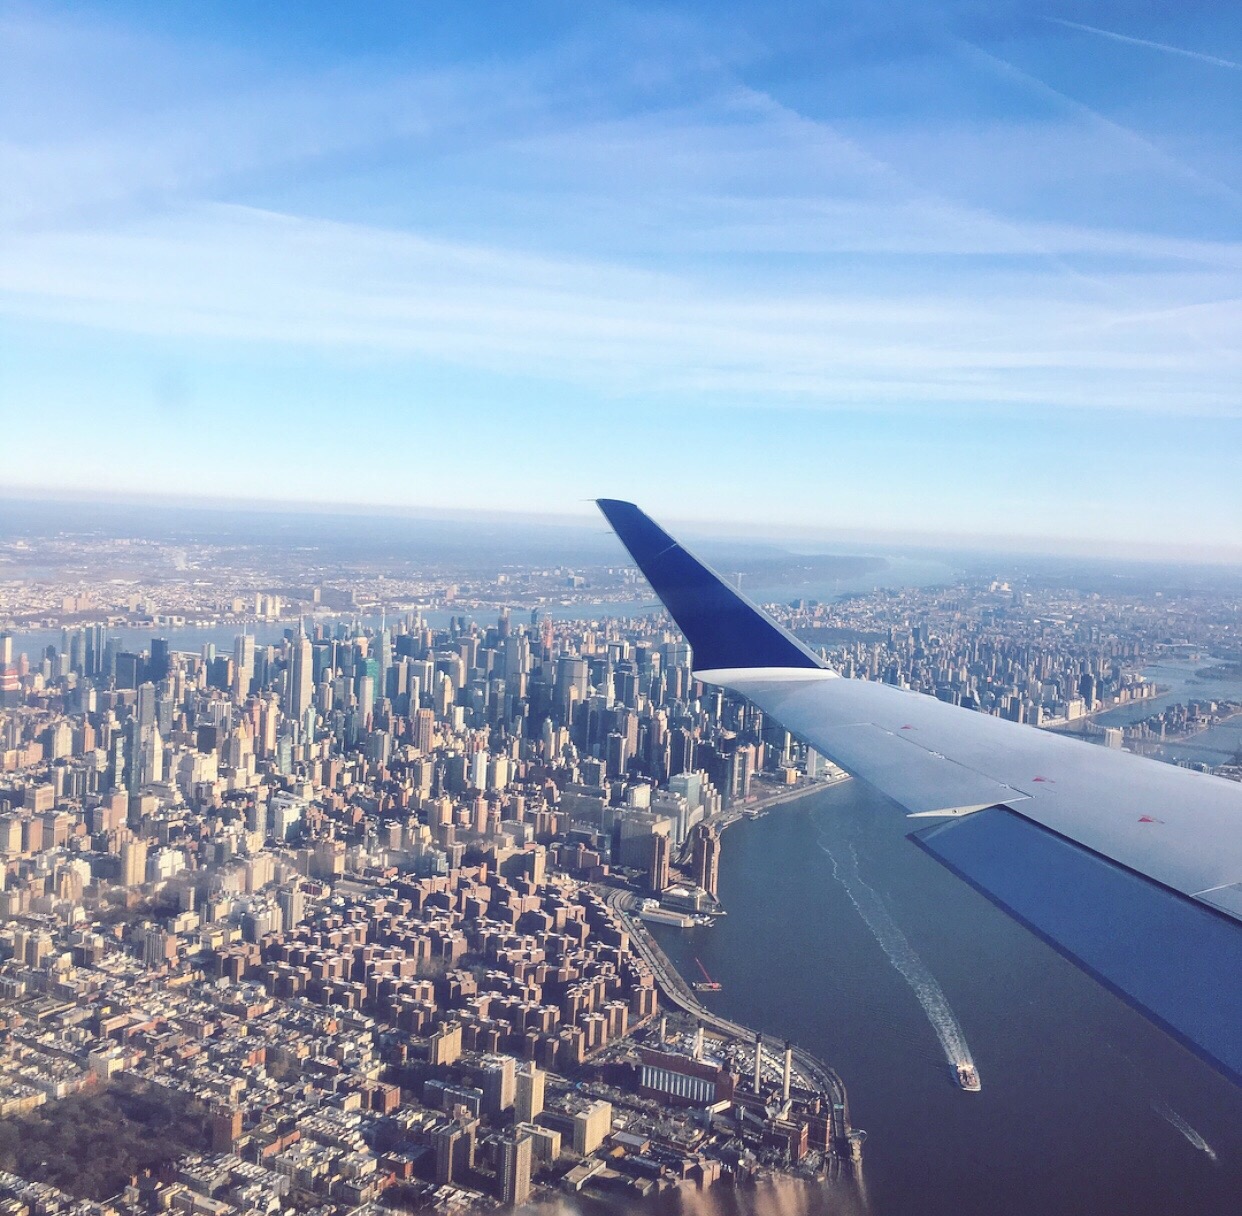 NYC Skyline from Plane